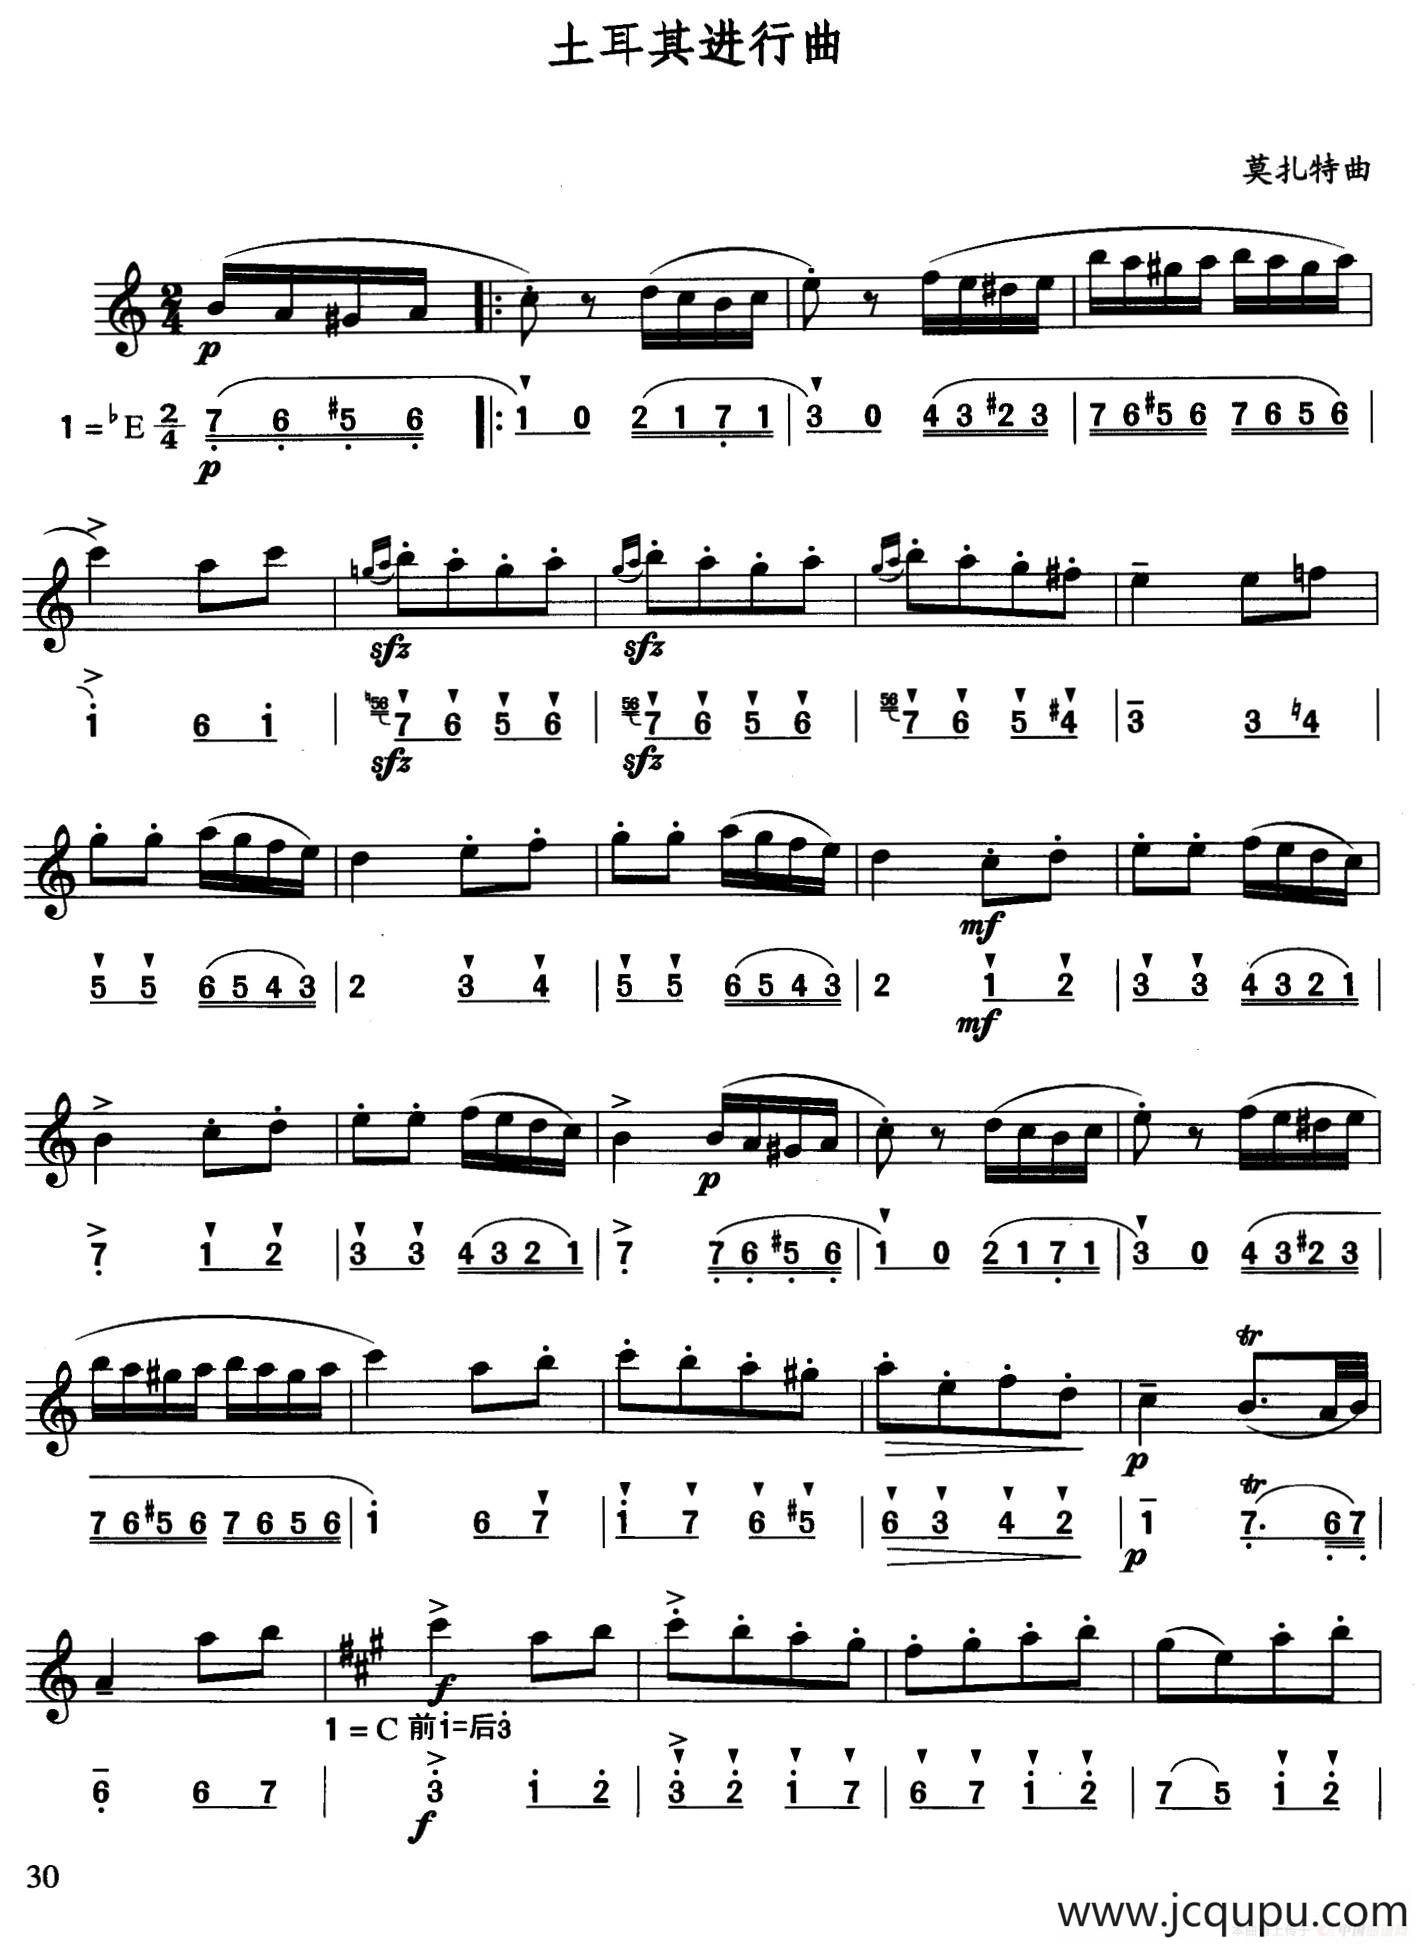 D大调小步舞曲-莫扎特钢琴谱-环球钢琴网